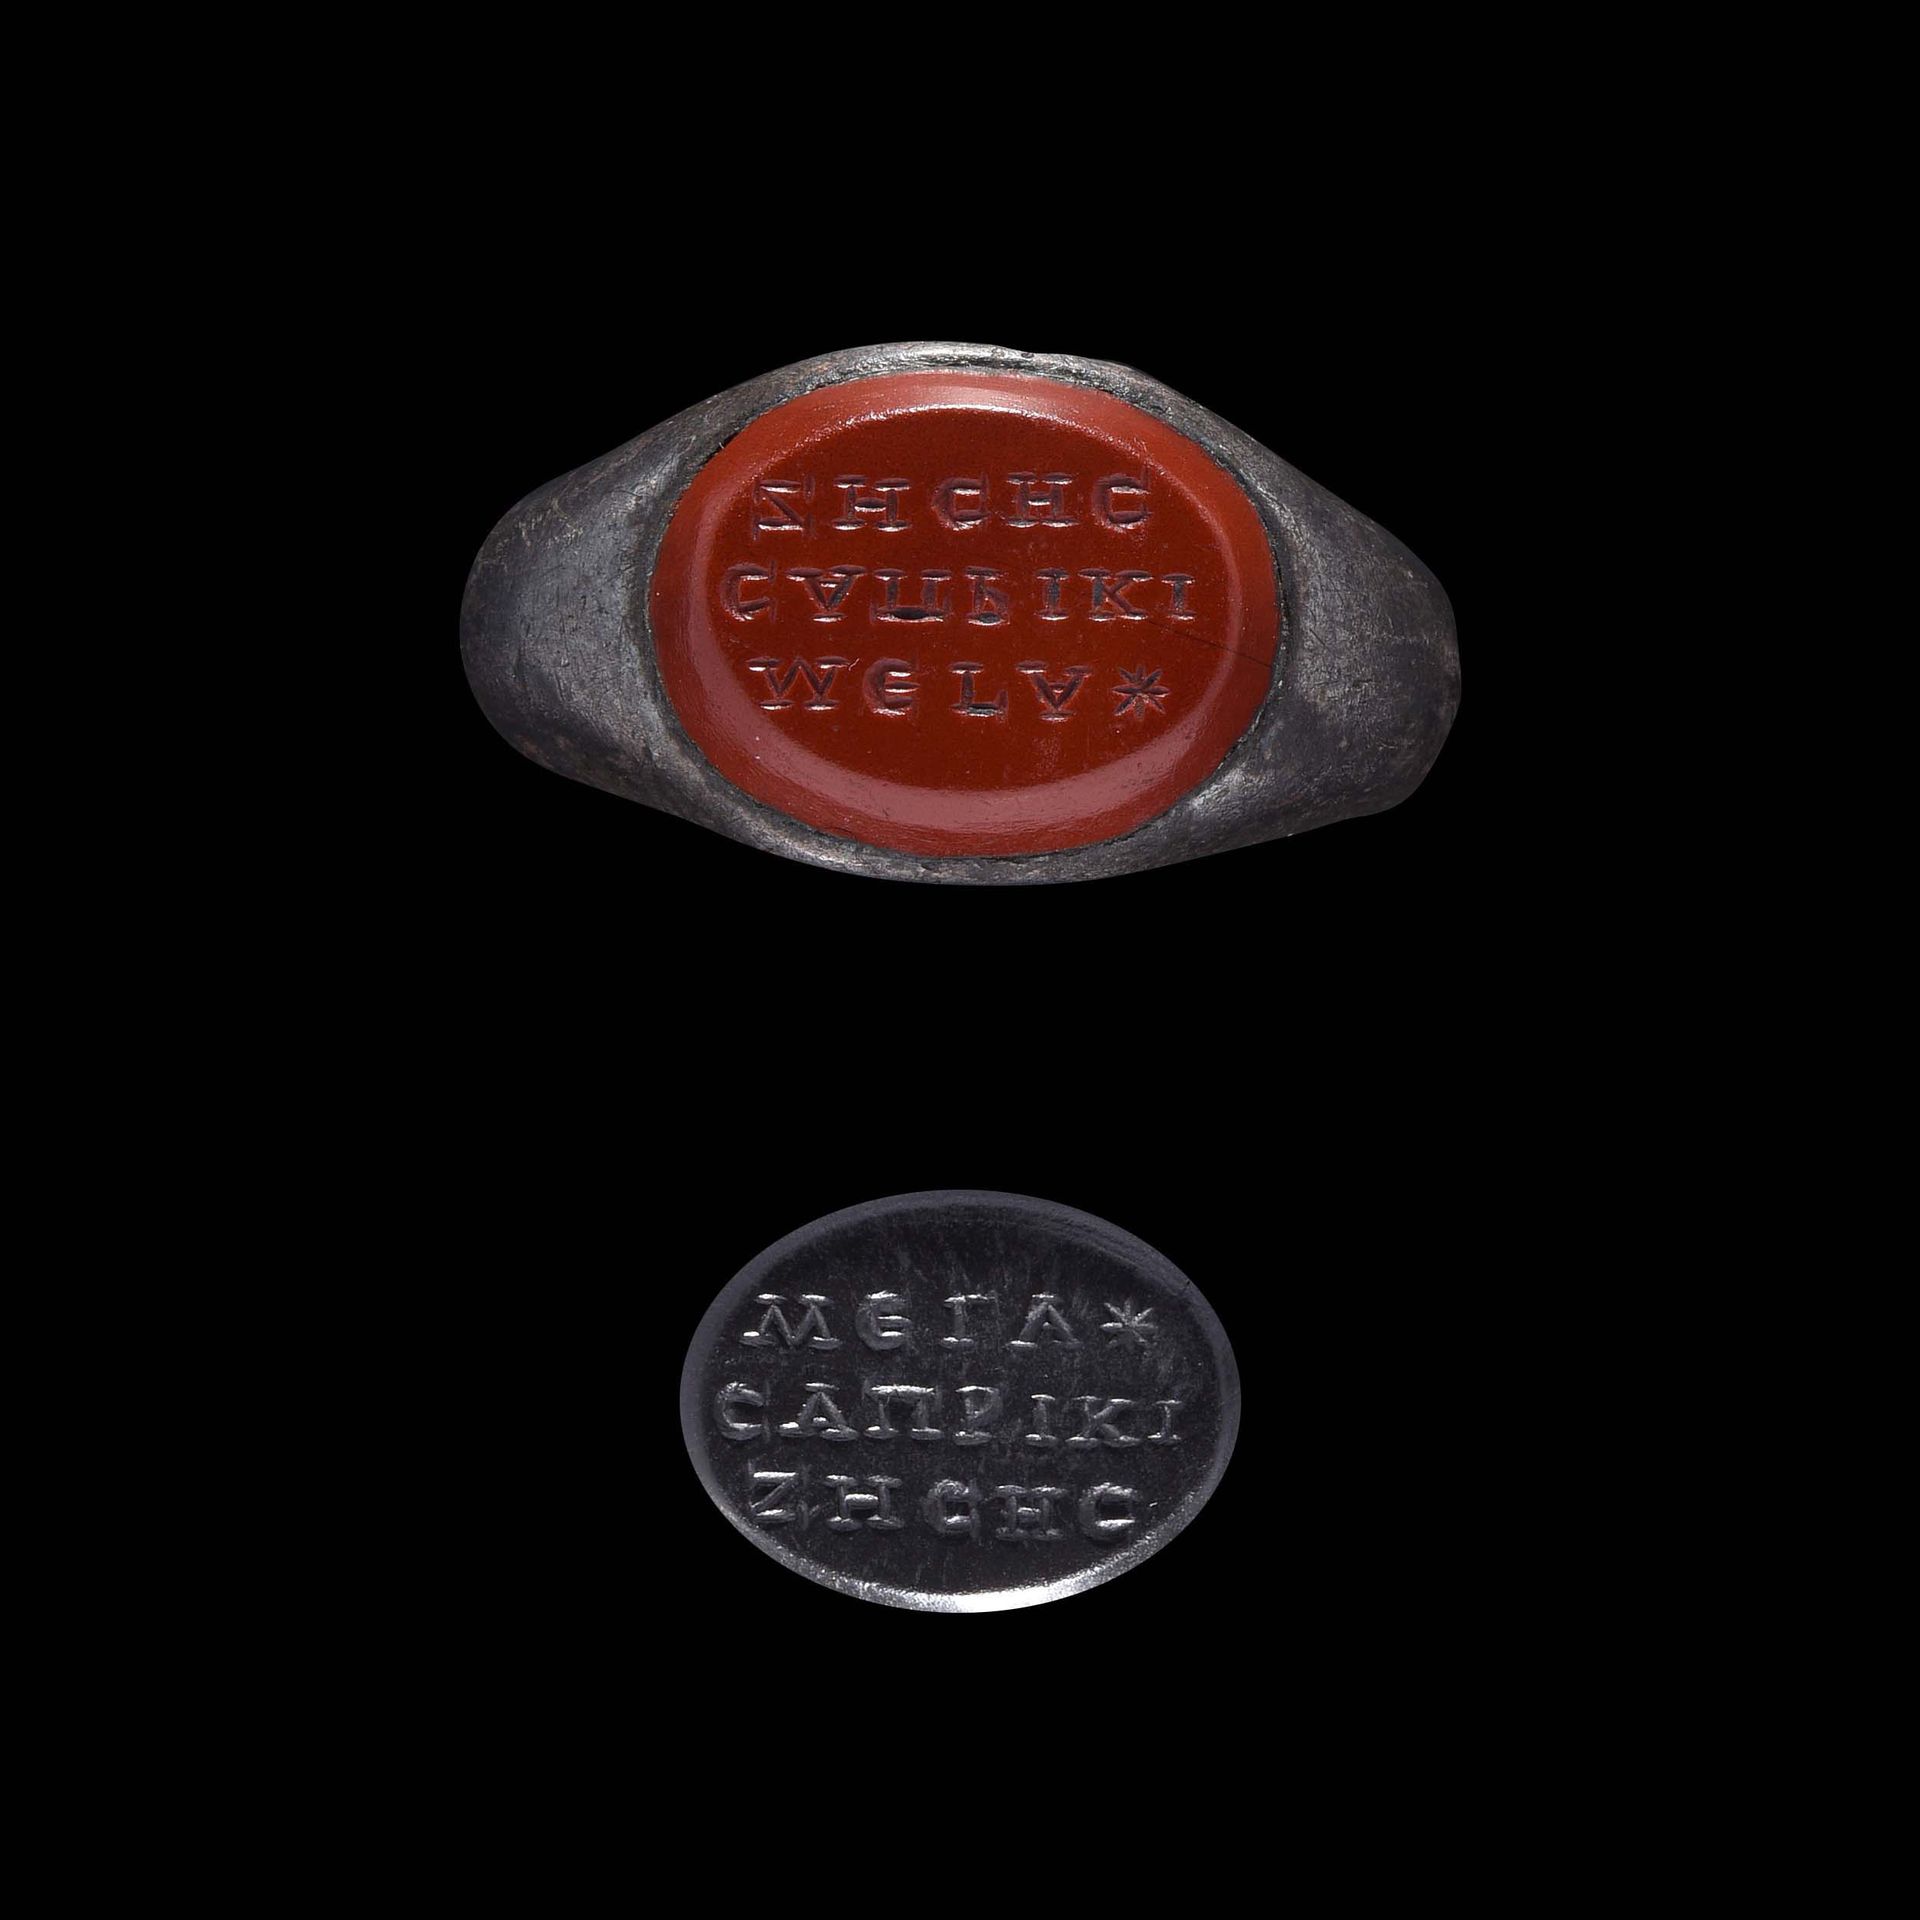 Null 凹凸不平的戒指

罗马艺术，3世纪。

银质，在红色碧玉上镶嵌大型凹版，刻有希腊字母铭文：MEGA SAPRIKI ZESES（写成ZHSHS），意思&hellip;